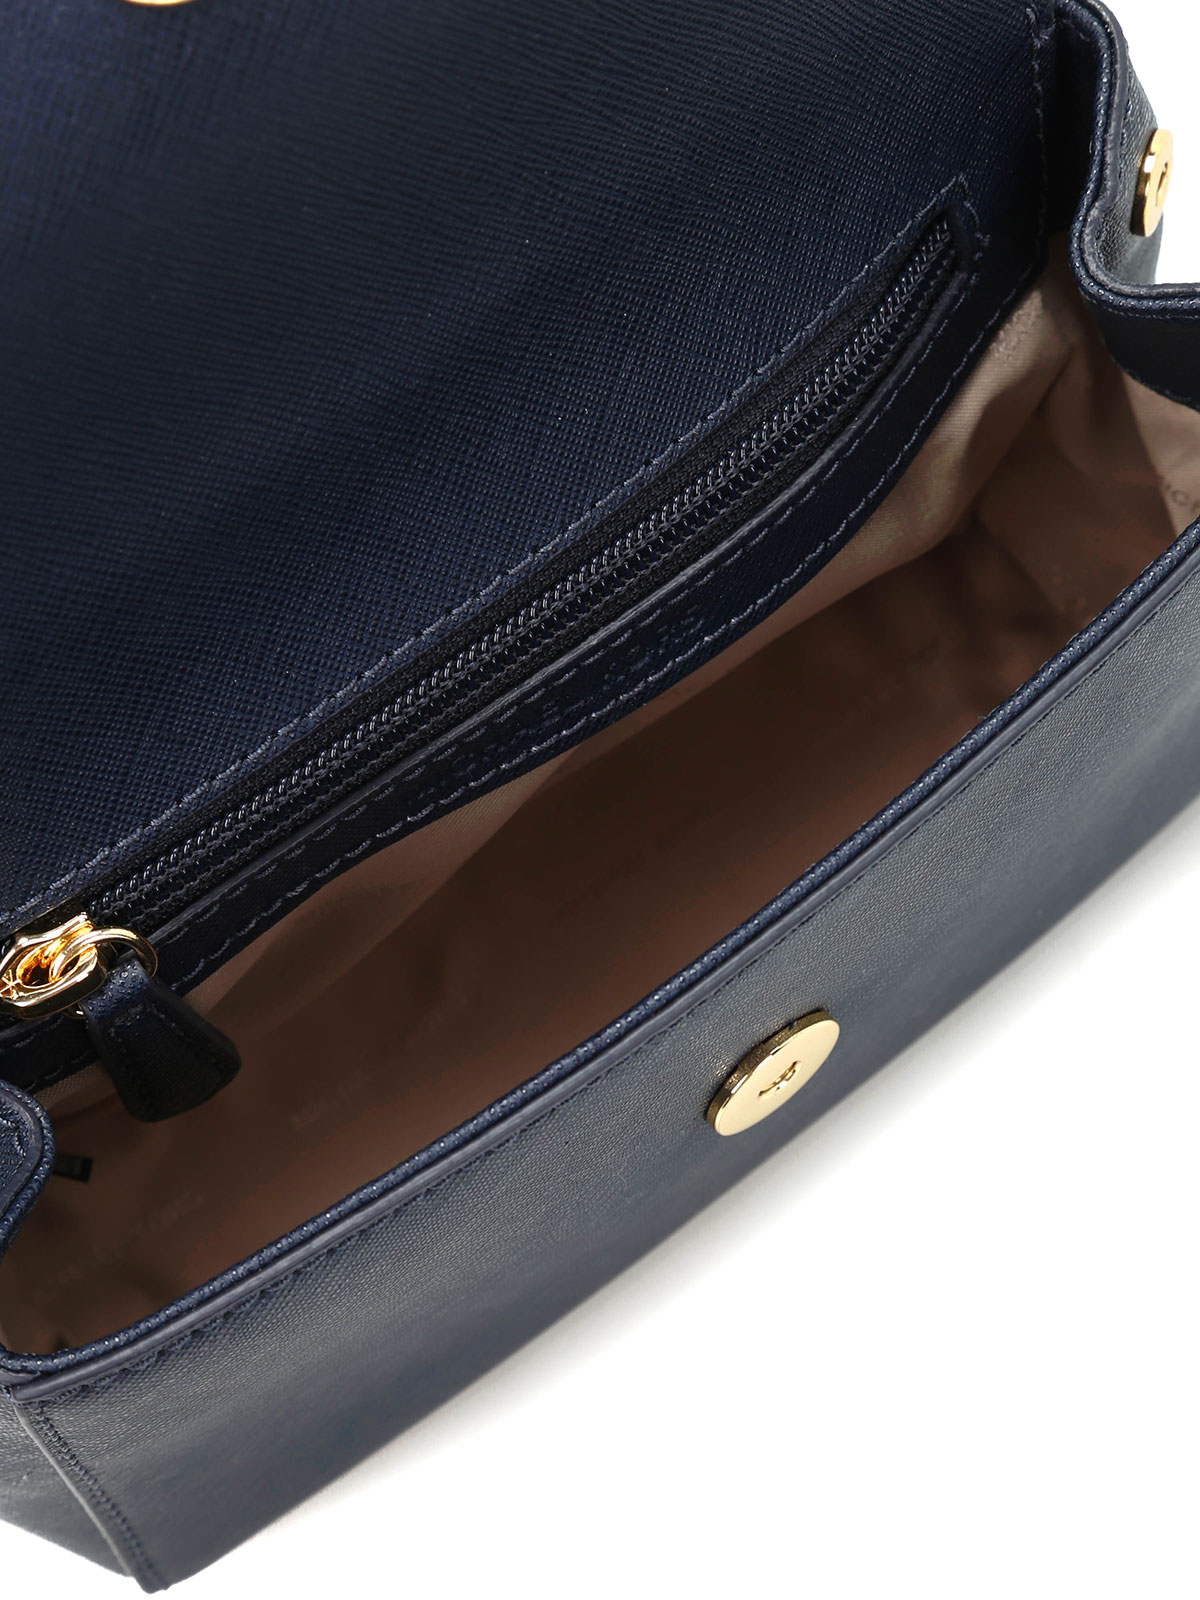 Michael Kors Ava Mini XS Crossbody Satchel Handbag Steel Blue